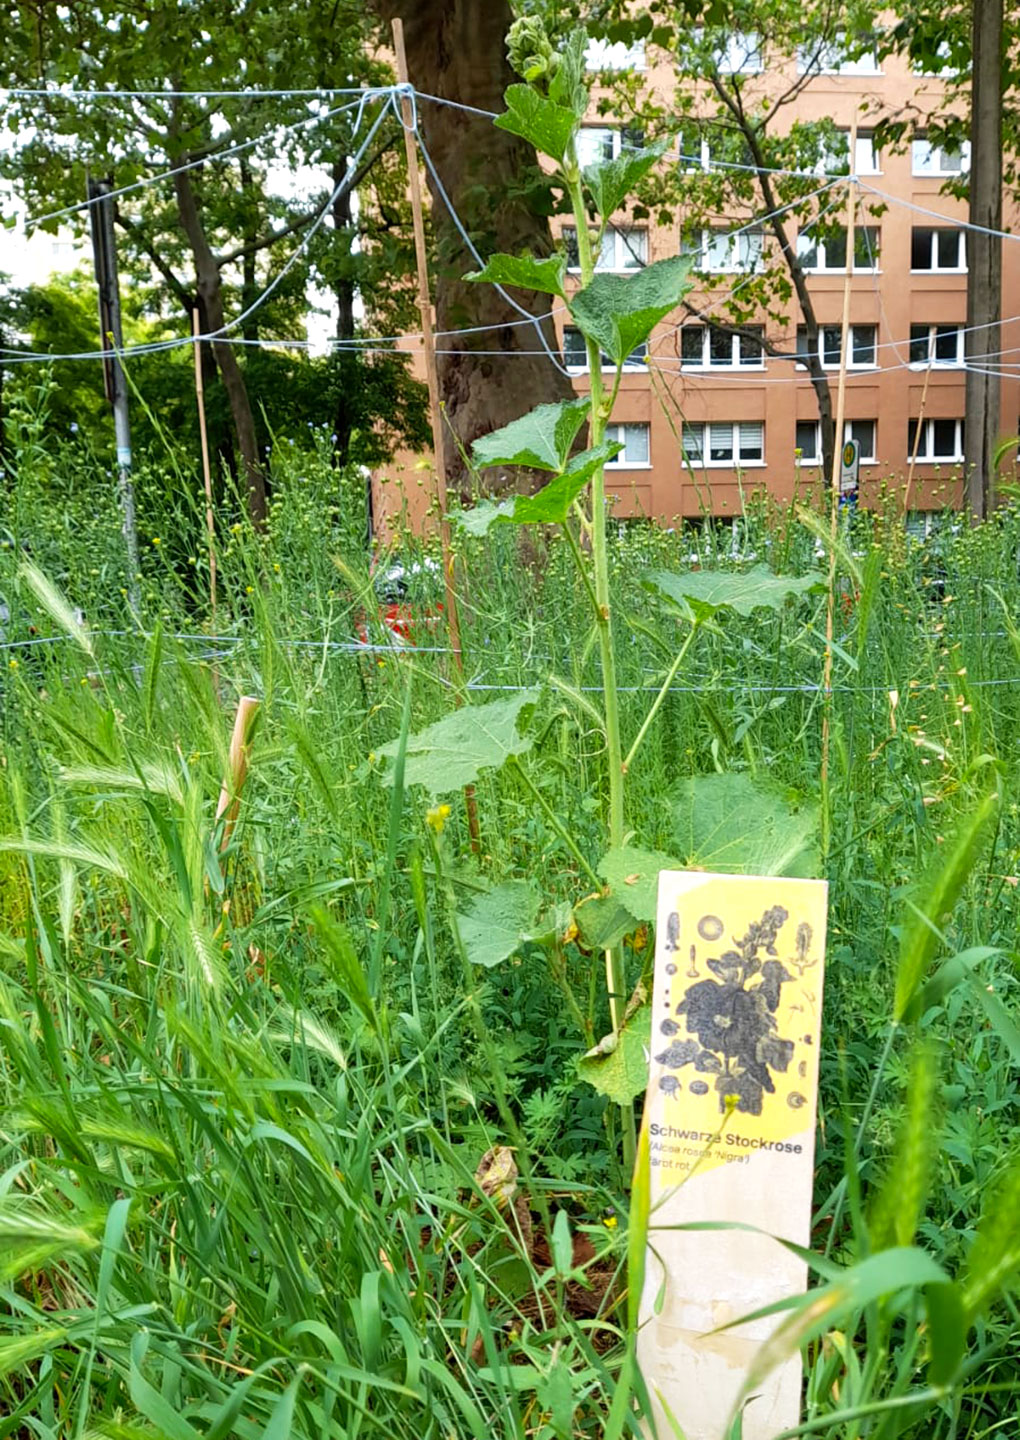 Schwarze Stockrose - Färbegarten